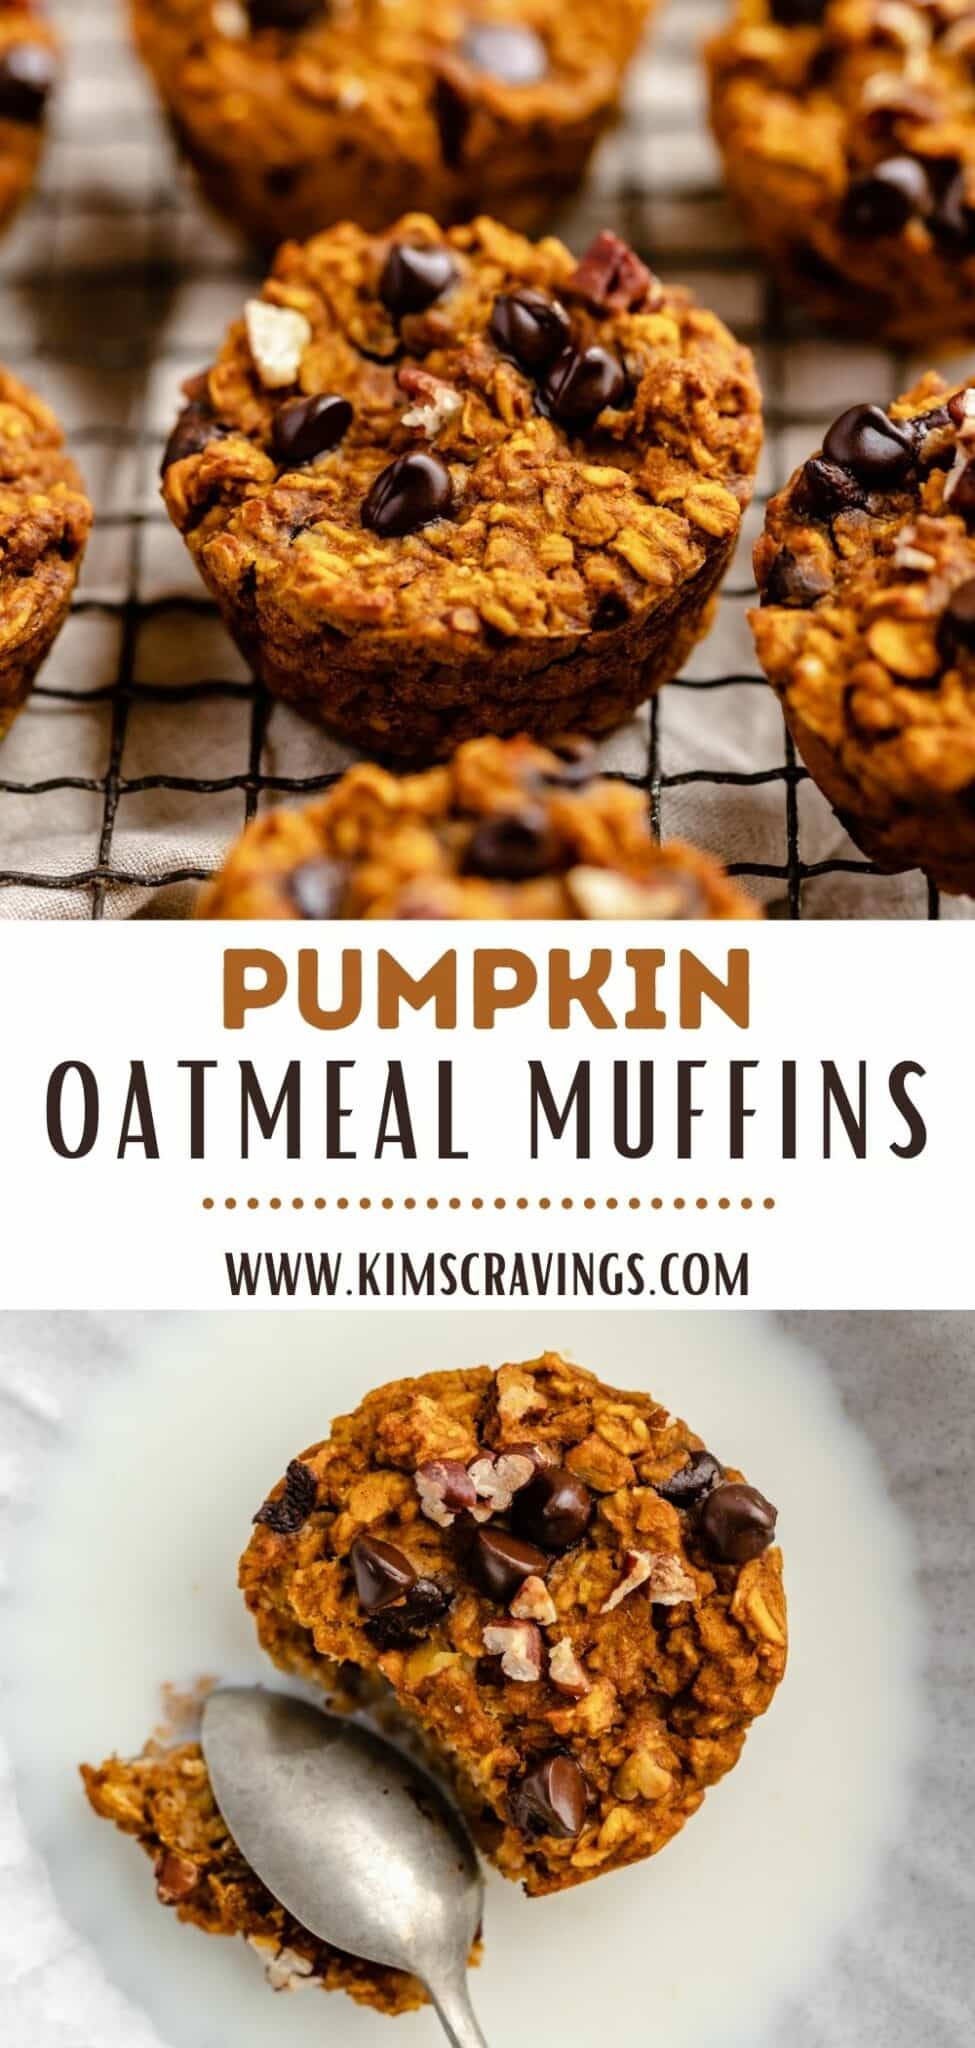 Pumpkin Oatmeal Muffins - Kim's Cravings